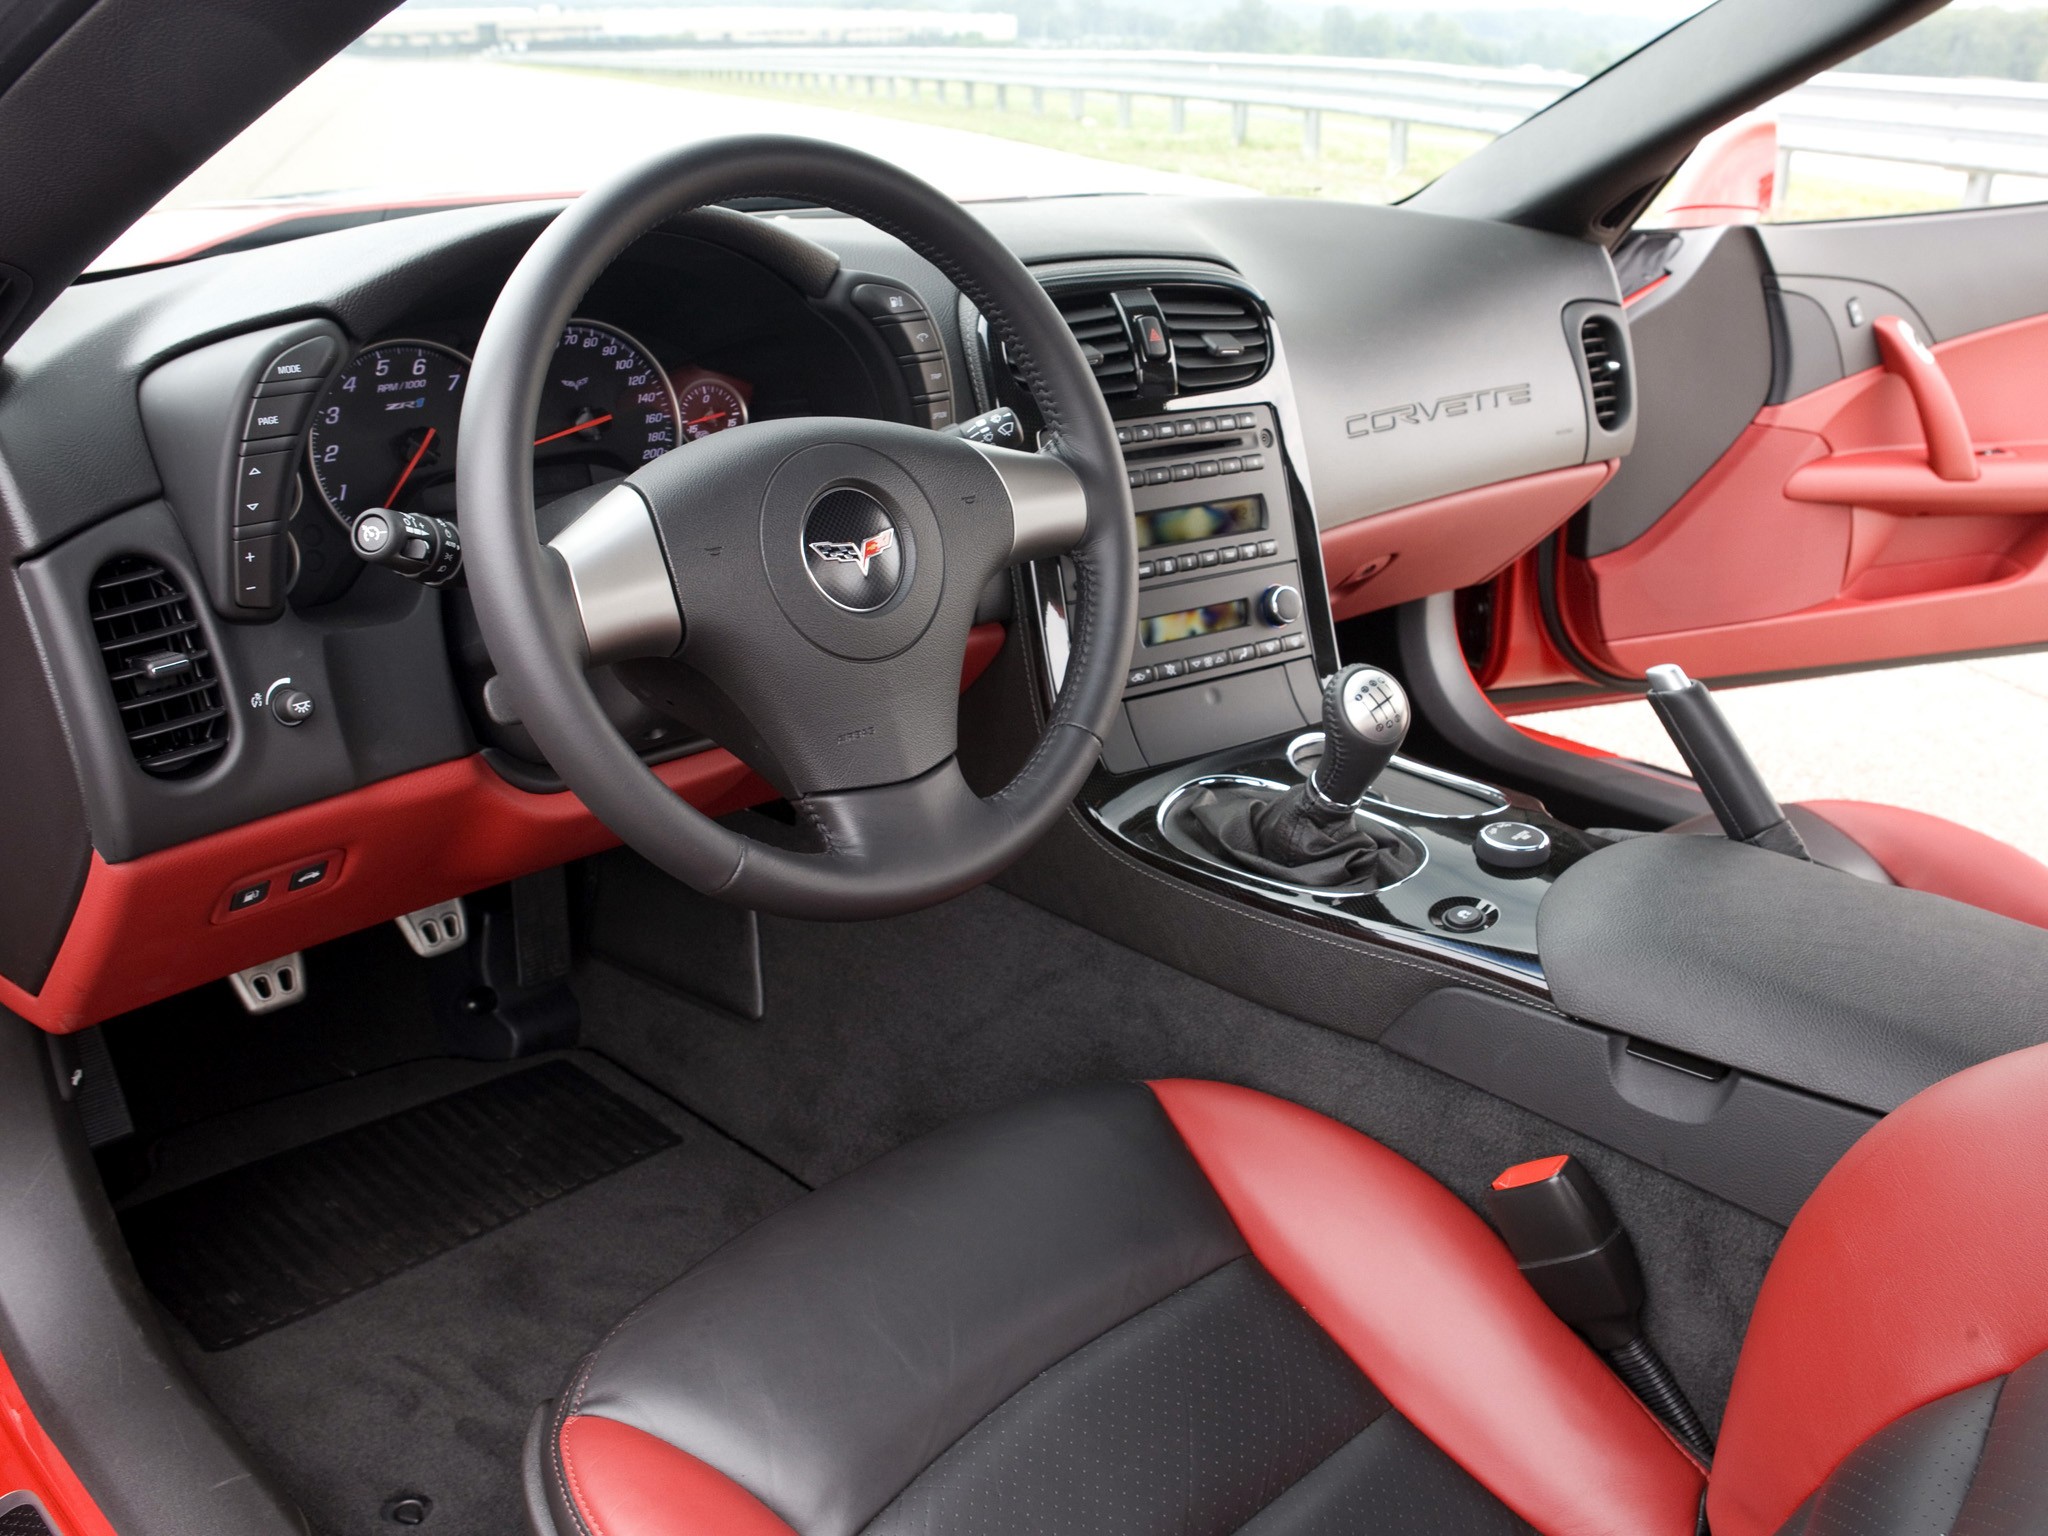 Zr1 Zr1s With Red Interior Corvetteforum Chevrolet